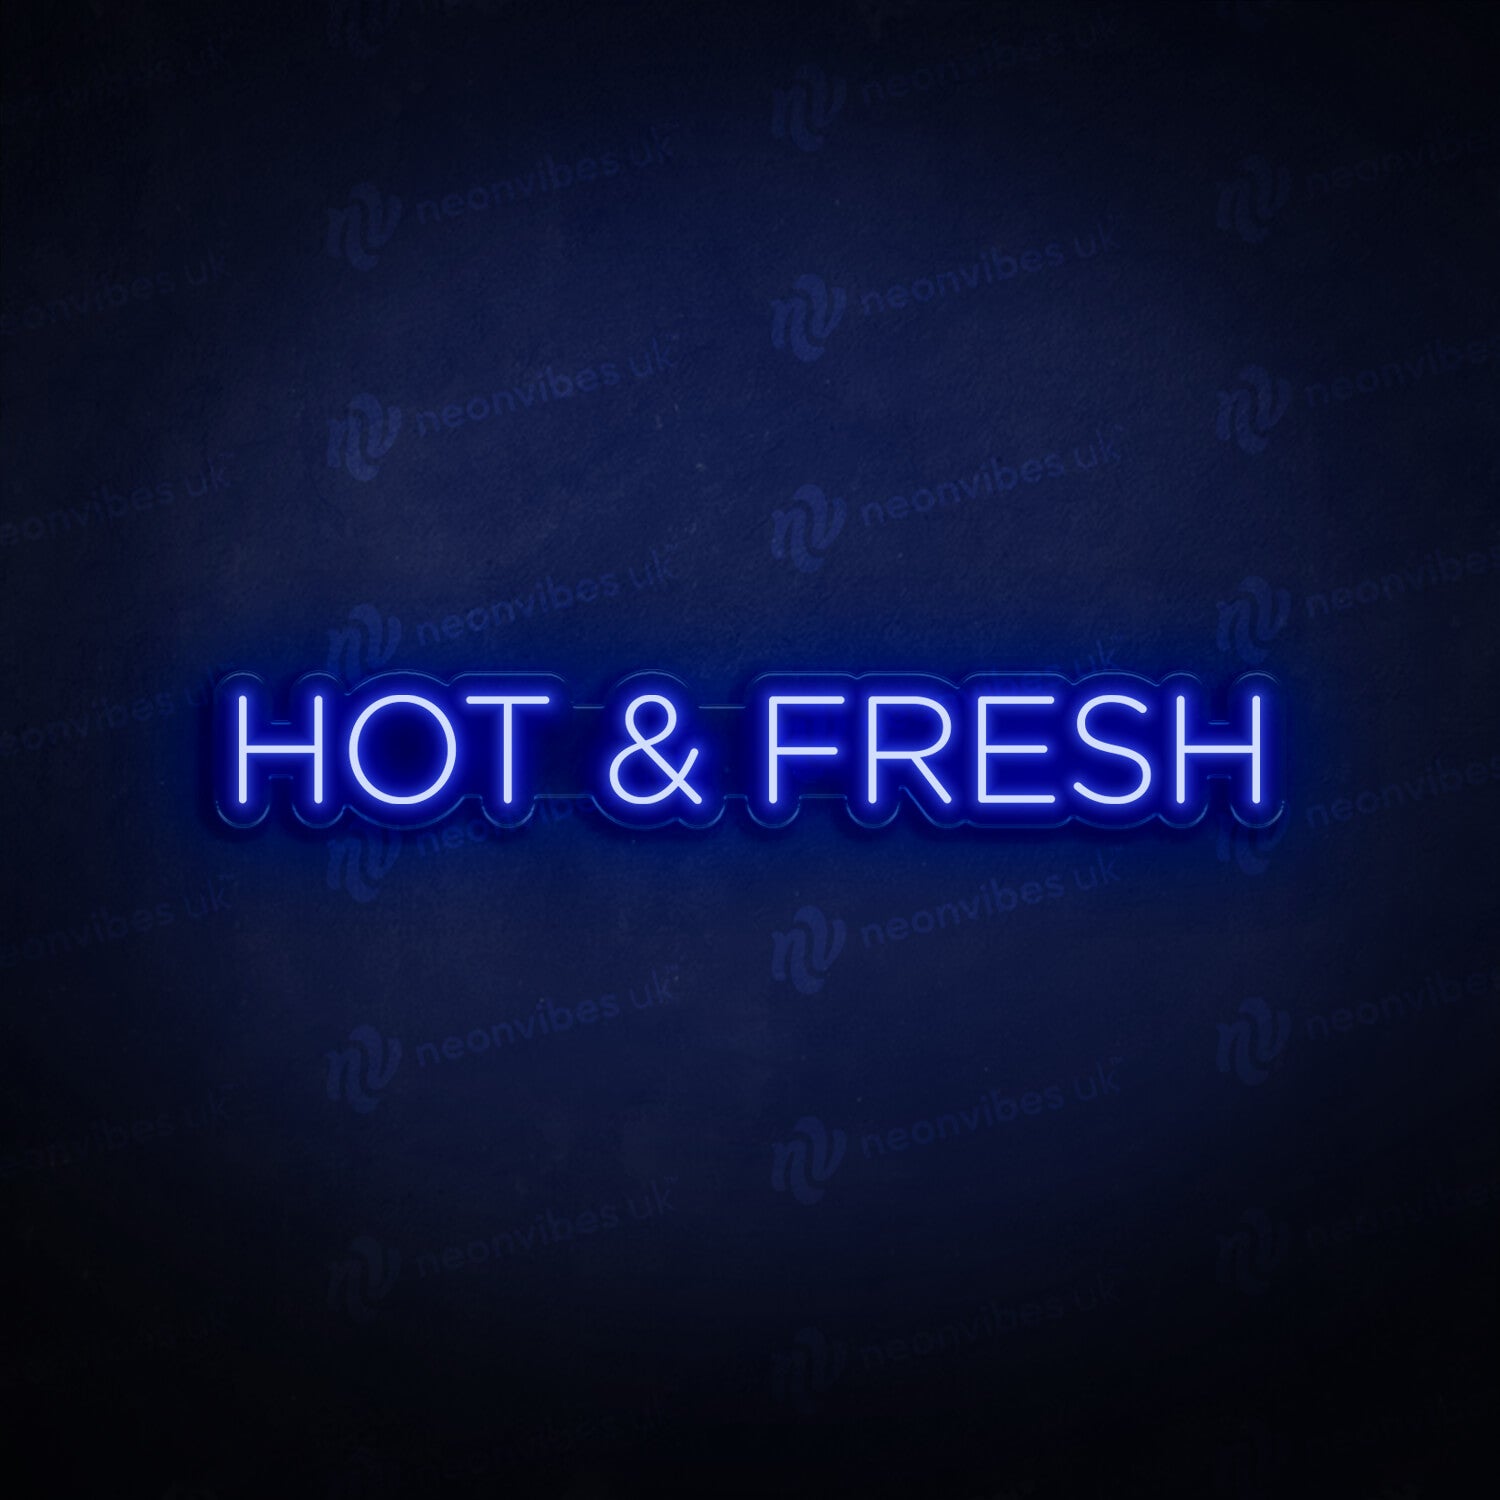 Hot & Fresh neon sign